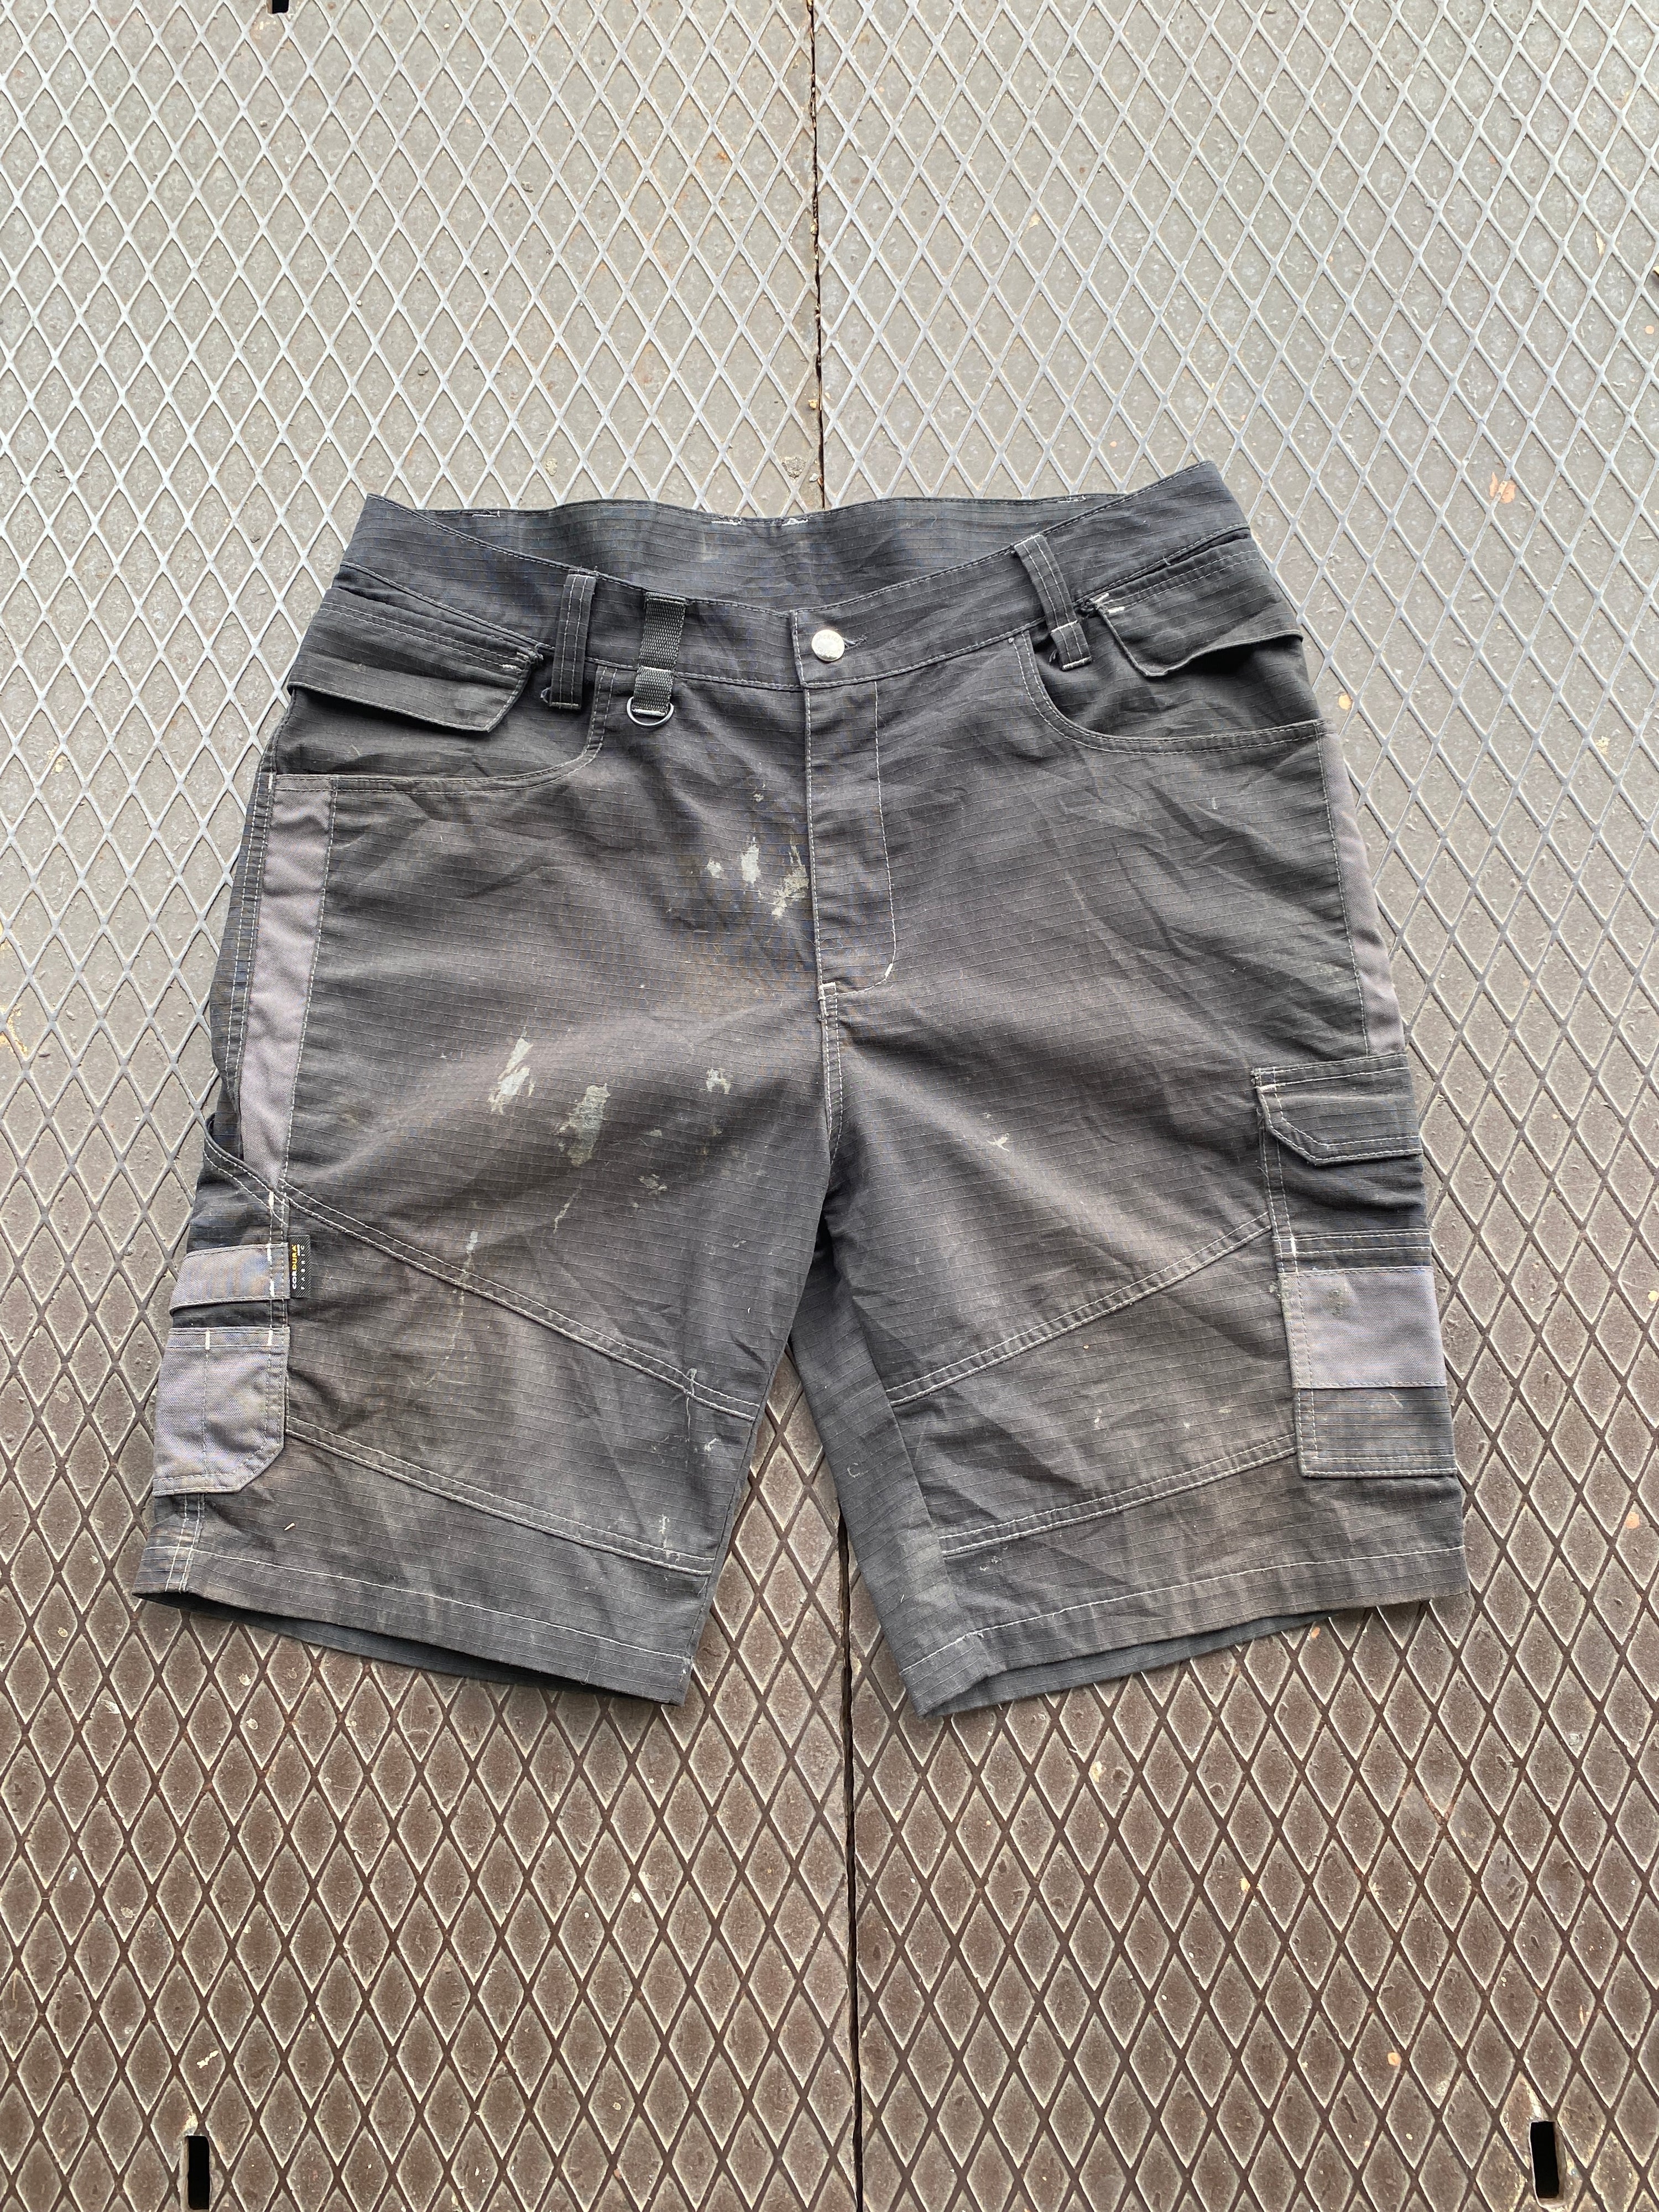 36 - Dickies Cordura Cargo Shorts Black/Grey Accents